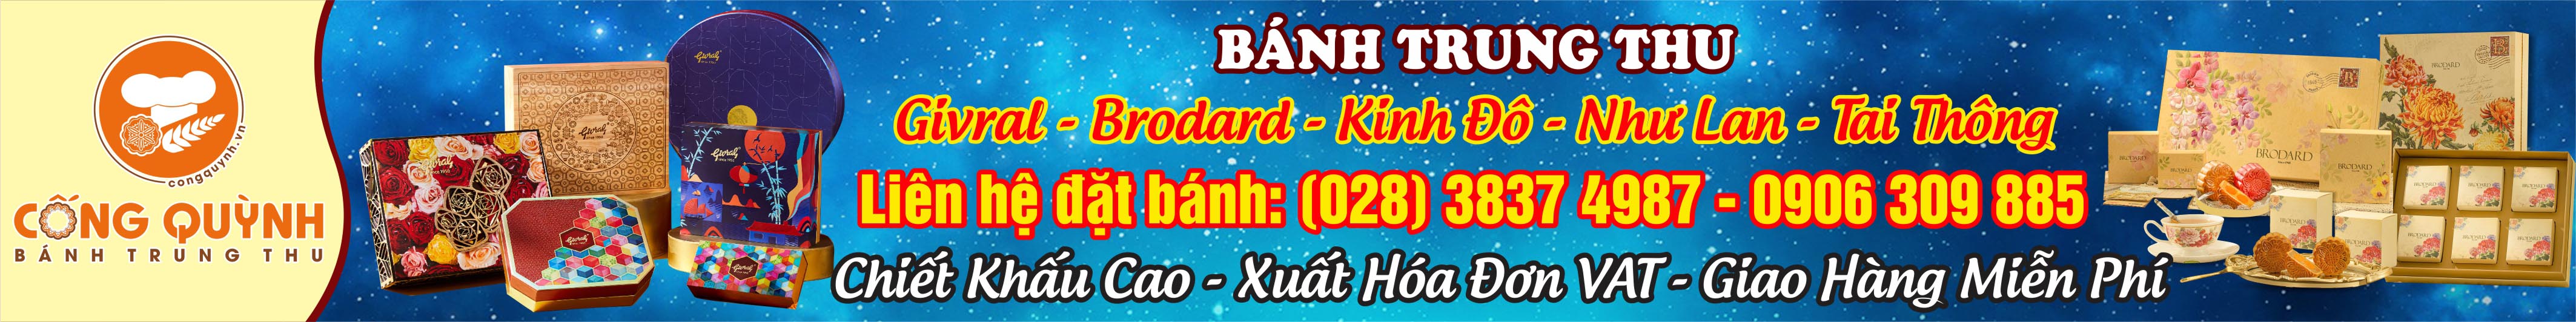 Baner Up Web_ Gioi Thieu_trung Thu Cong Quynh_2021-1